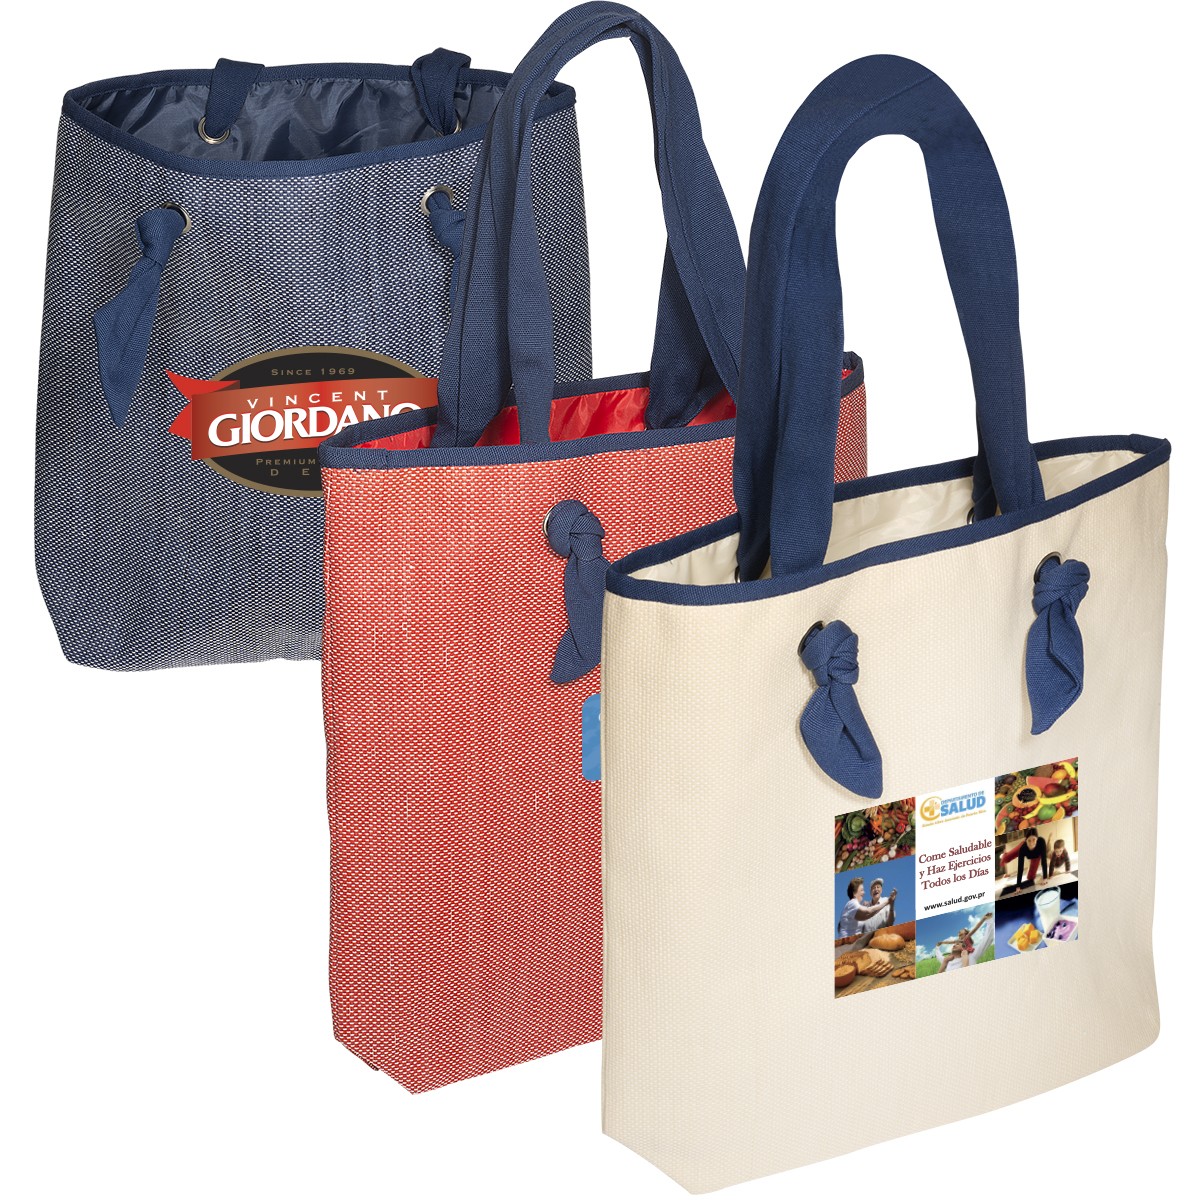 Custom Printed Tote Bag with Cotton Handles